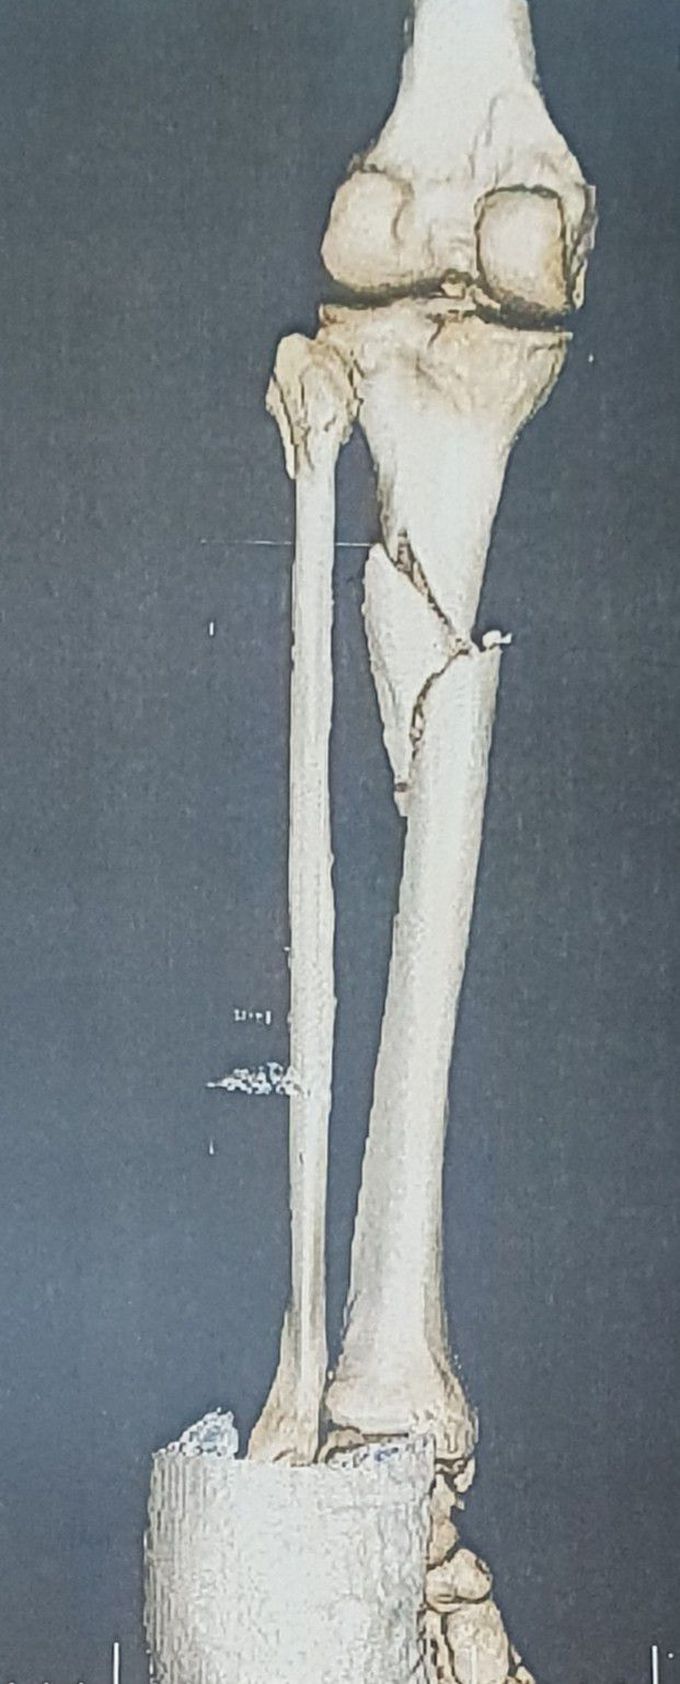 Tibia wedge shape fracture